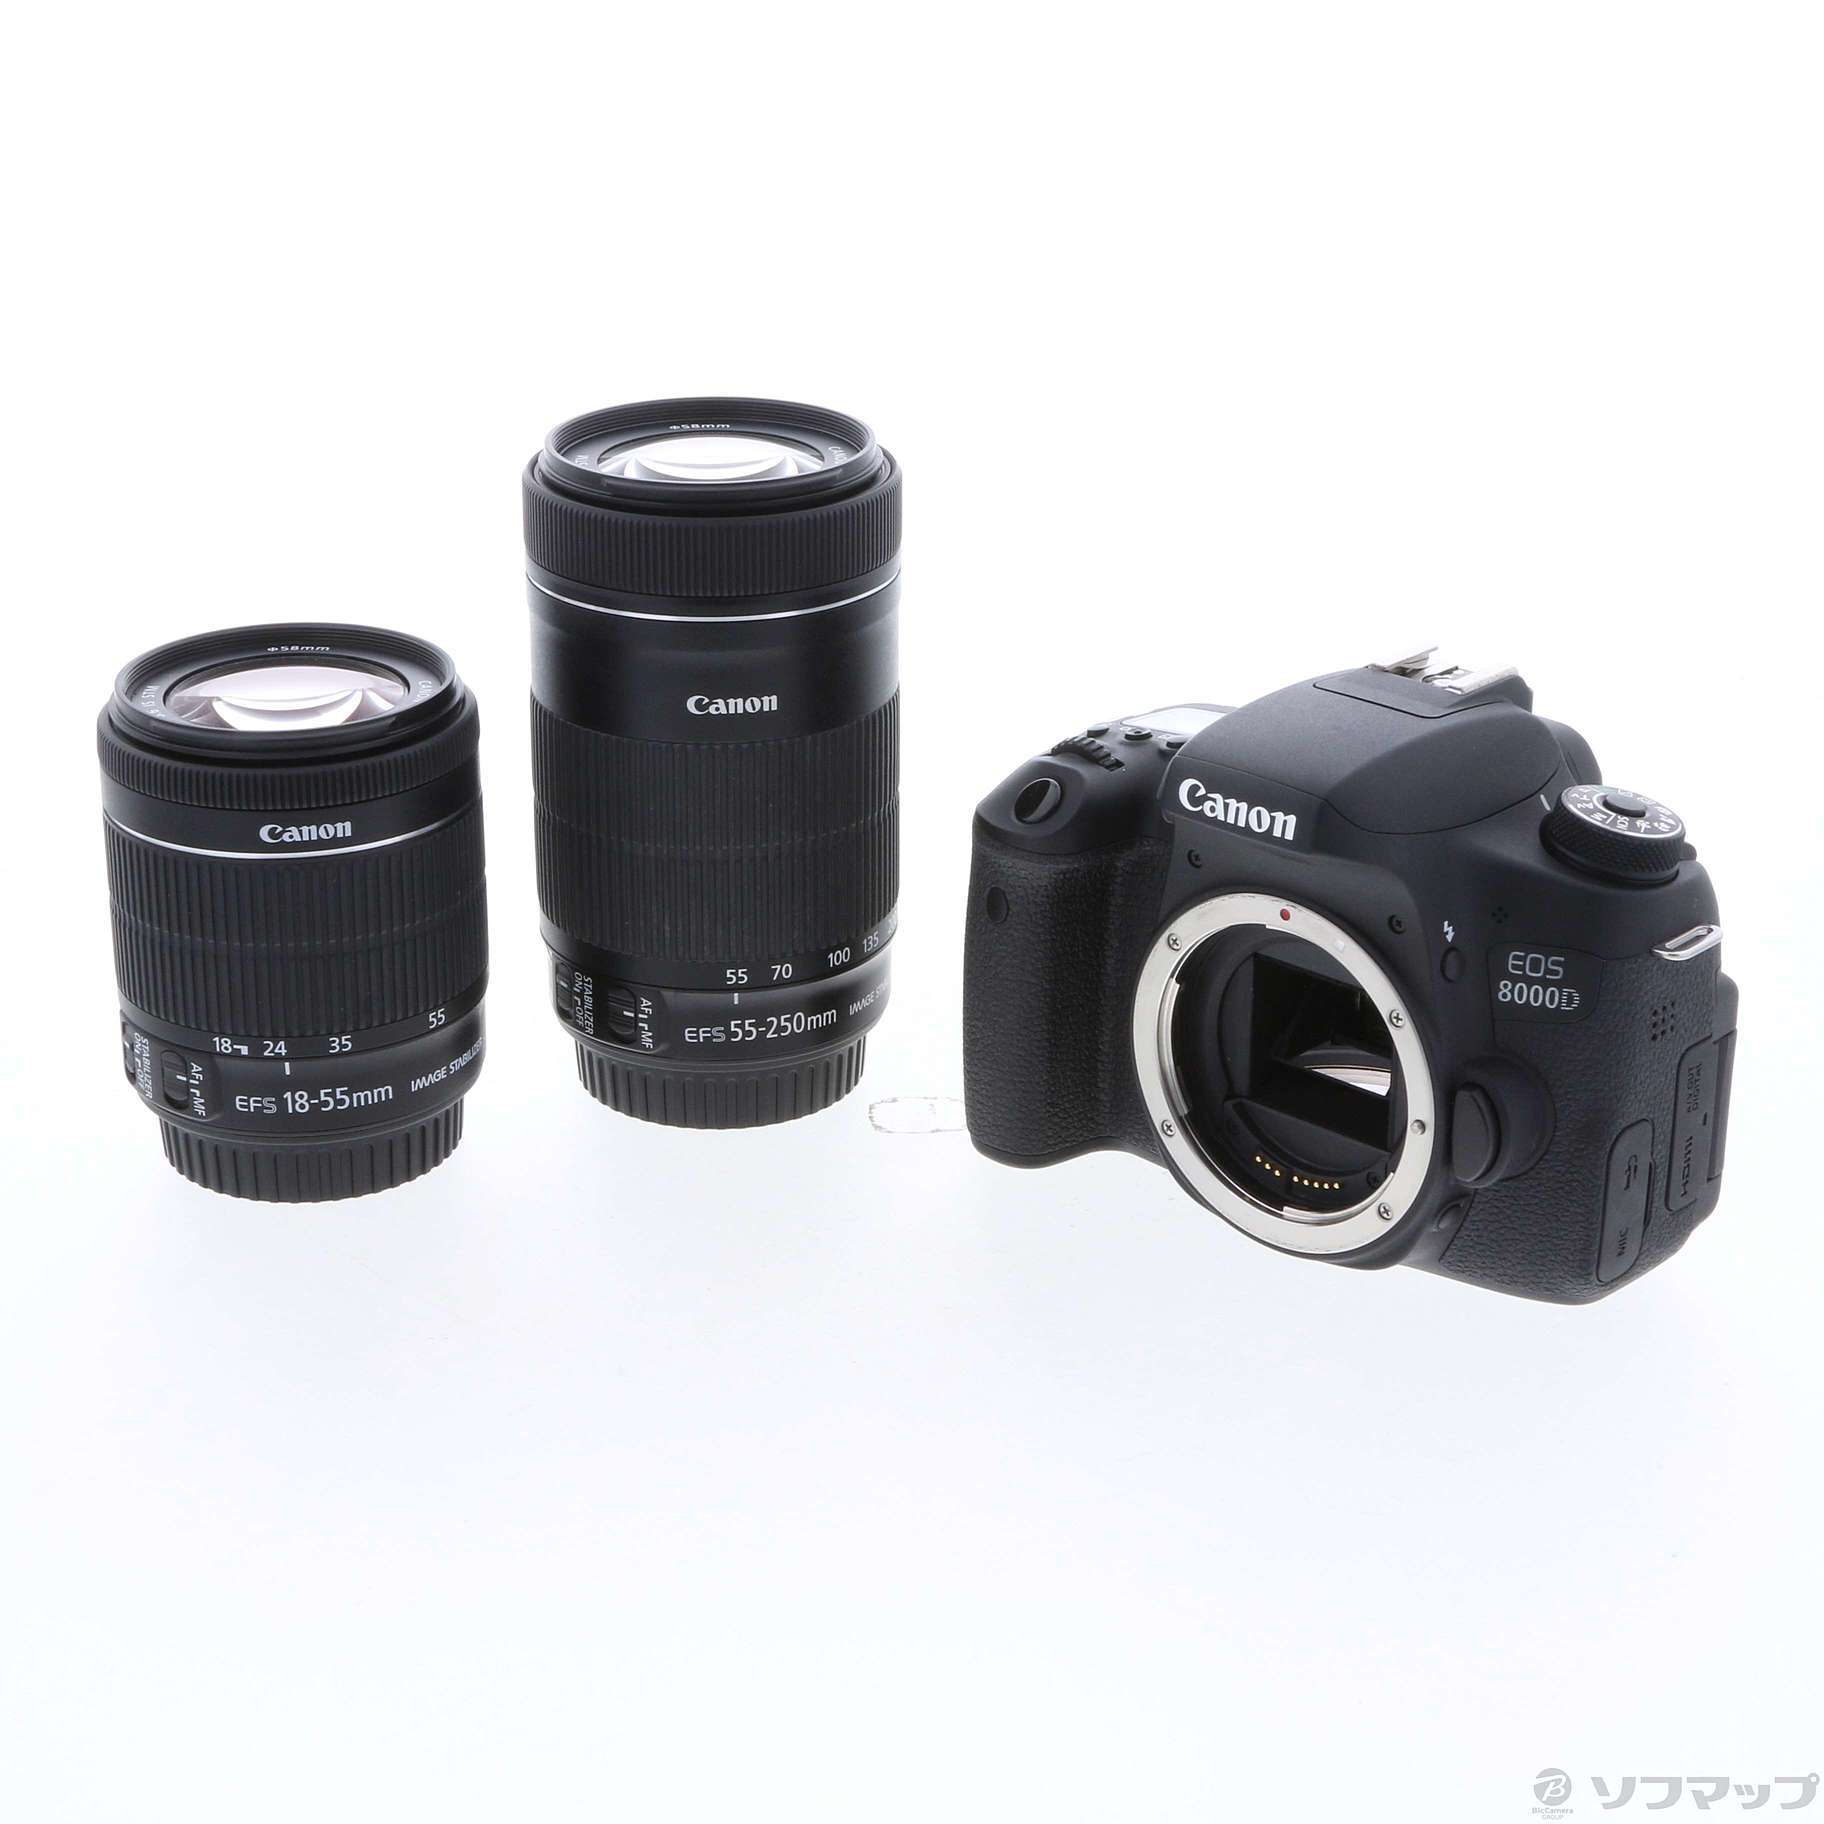 Canon EOS 8000D (W) ダブルズームキット - www.sorbillomenu.com